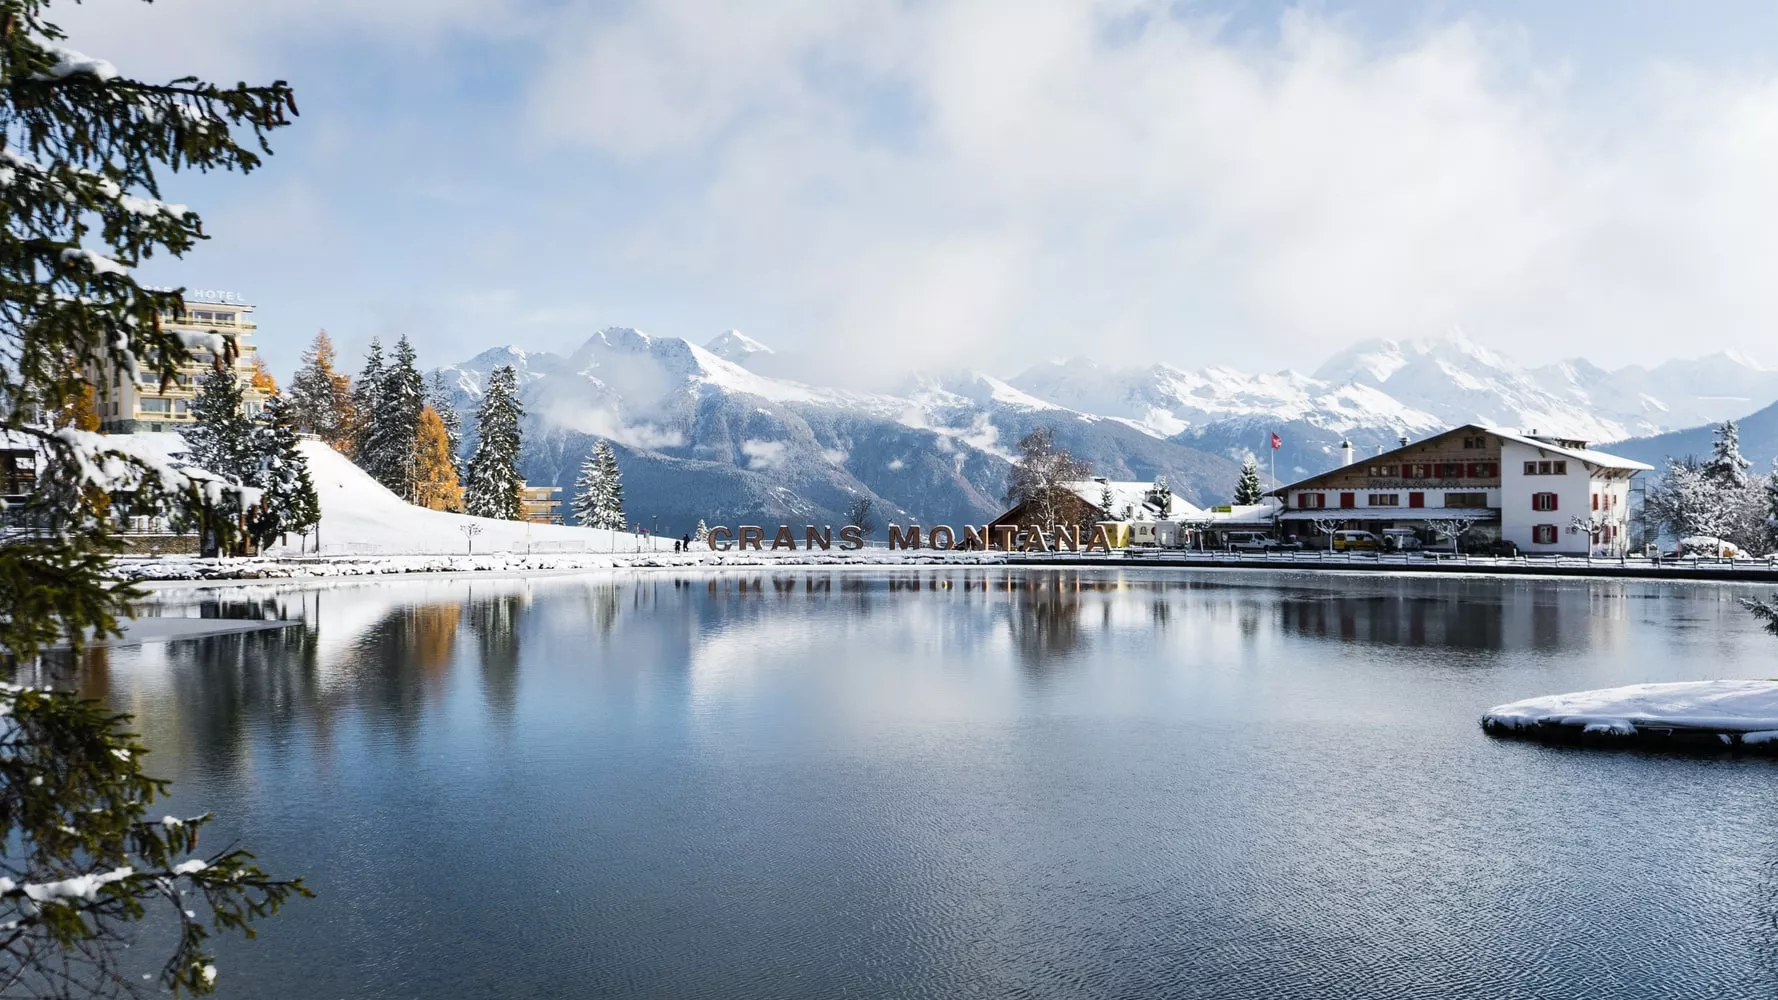 Crans-Montana Ski Resort in Switzerland, Europe | Snowboarding,Skiing,Snowmobiling - Rated 7.3